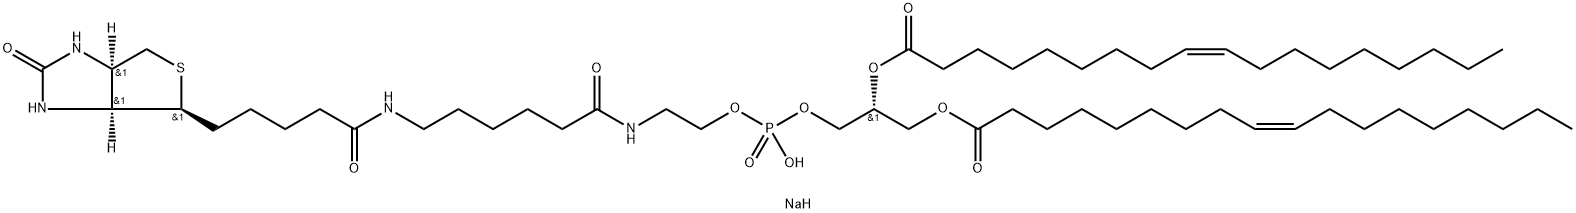 1,2-dioleoyl-sn-glycero-3-phosphoethanolaMine-N-(cap biotinyl) (sodiuM salt) price.